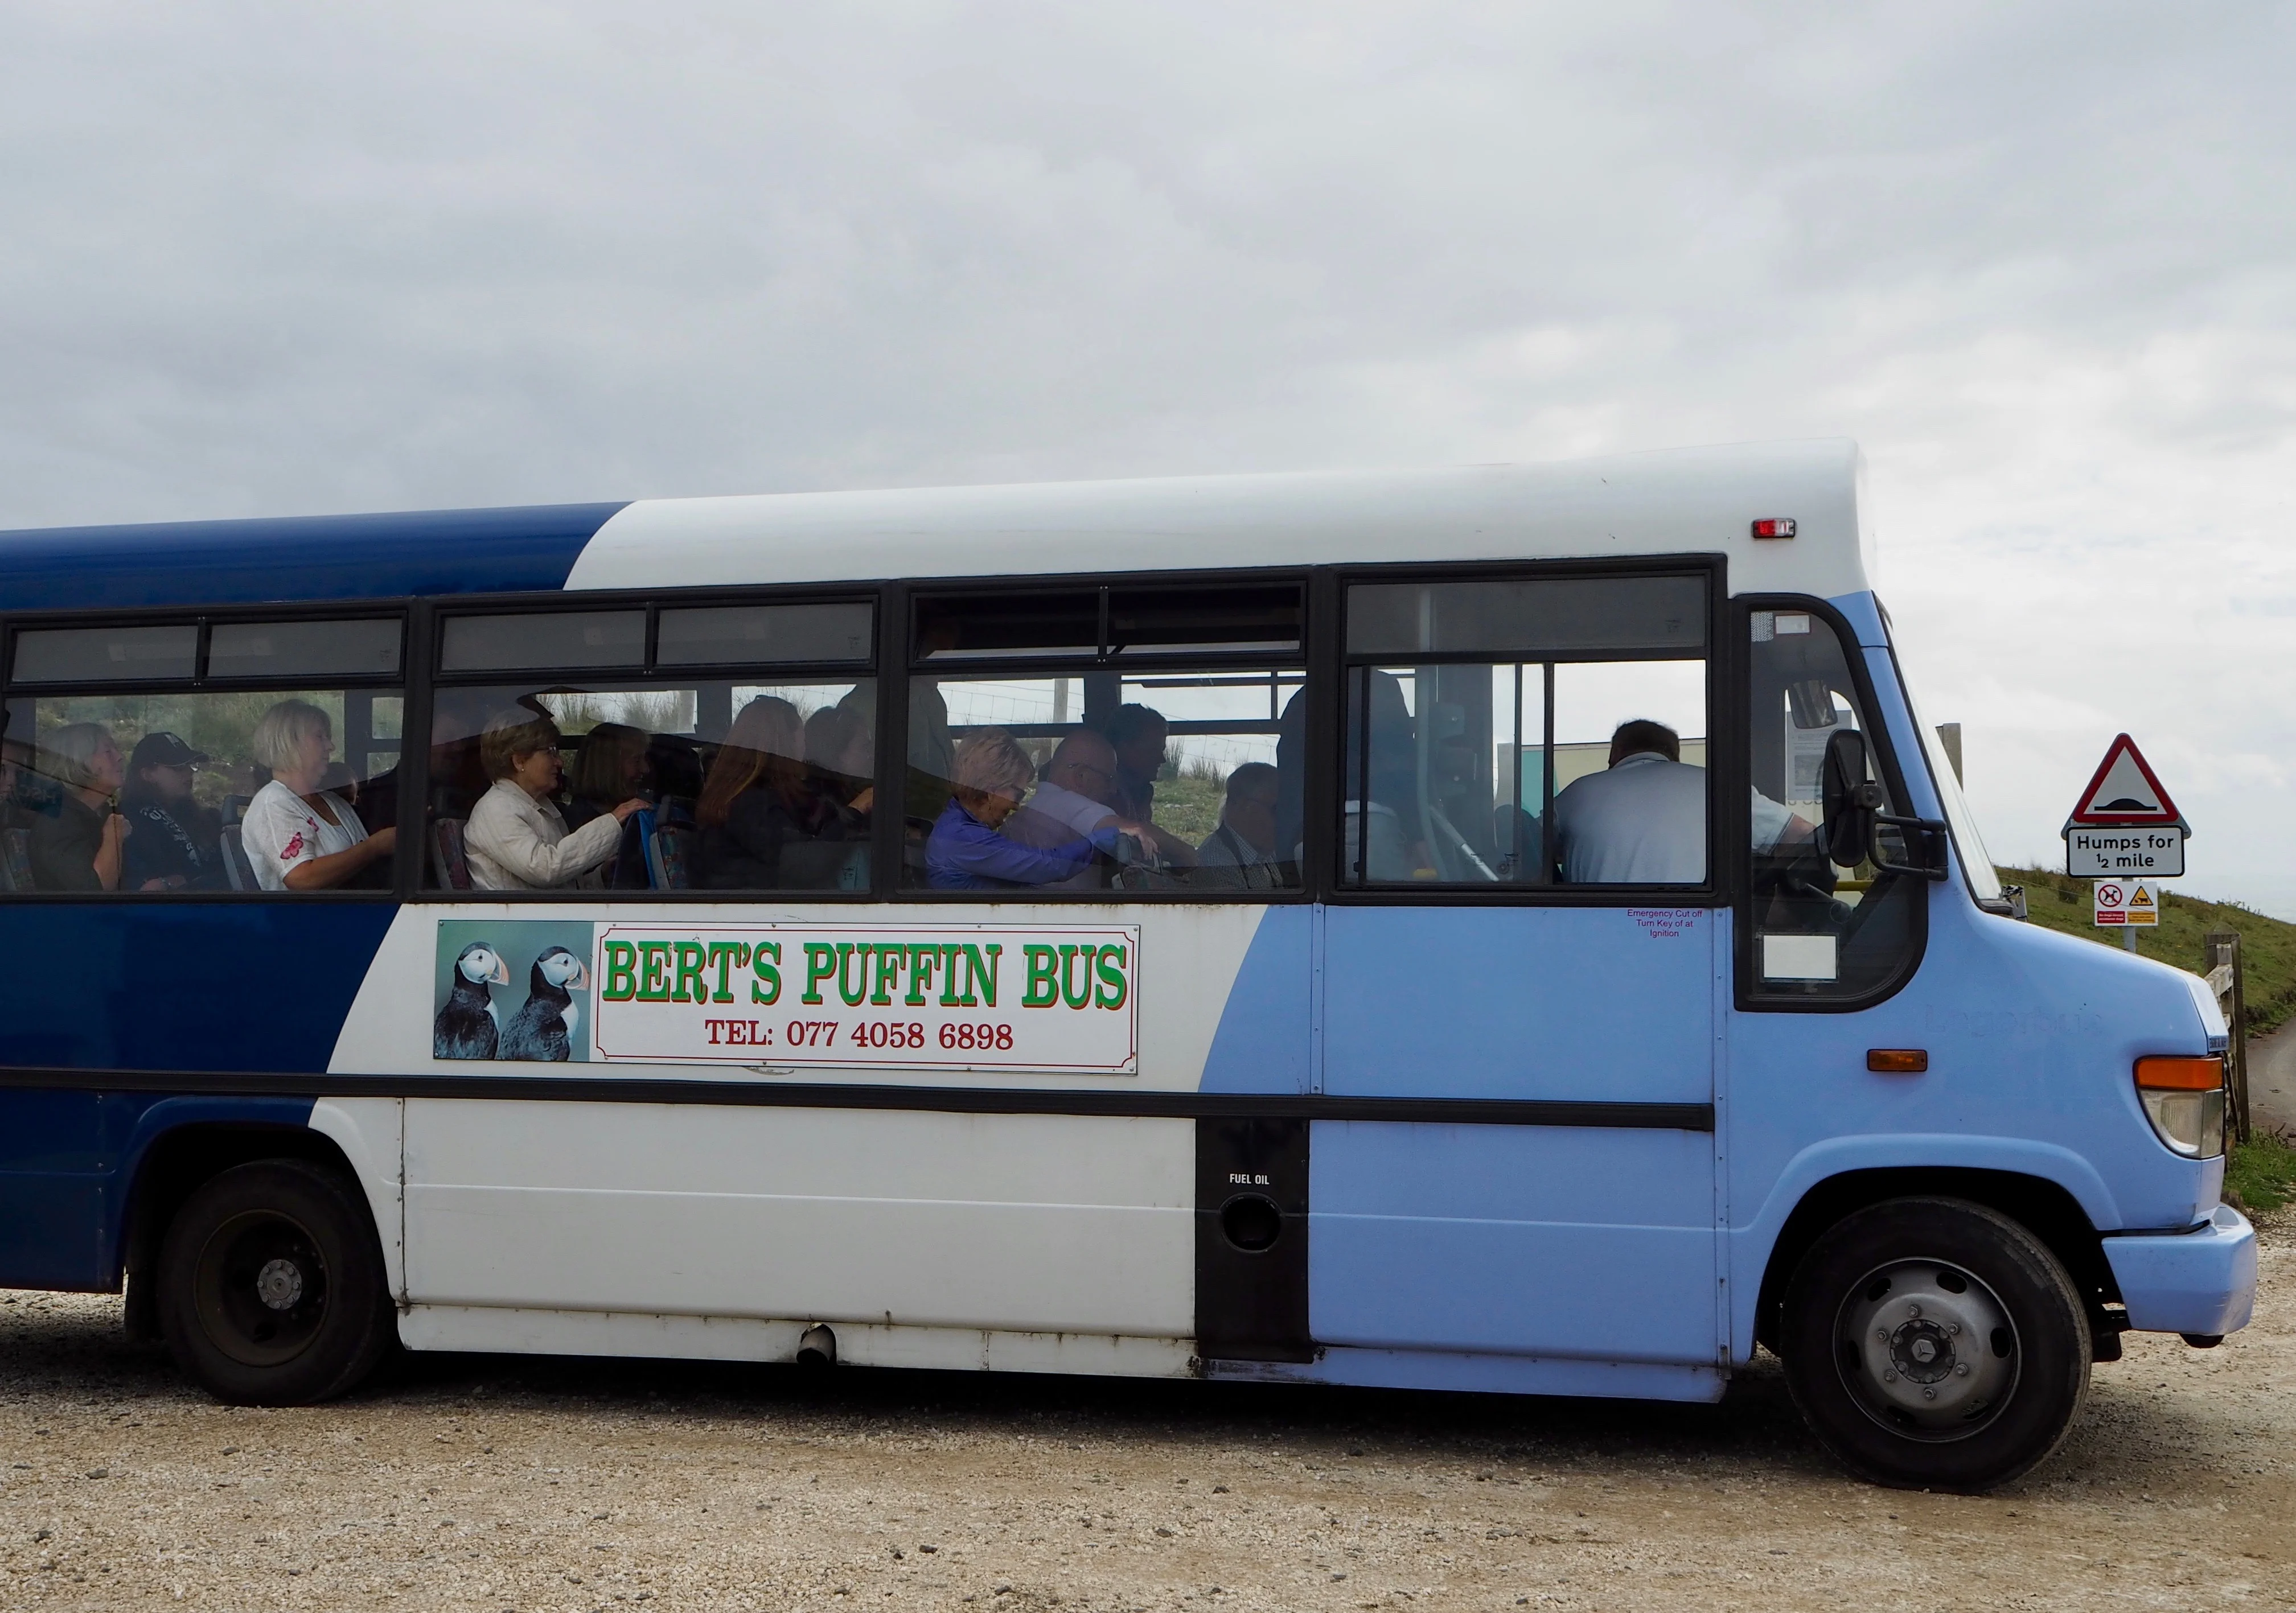 Bert's Puffin Bus Rathlin Island - Beyond the City Break in Belfast with Flybe and Avis